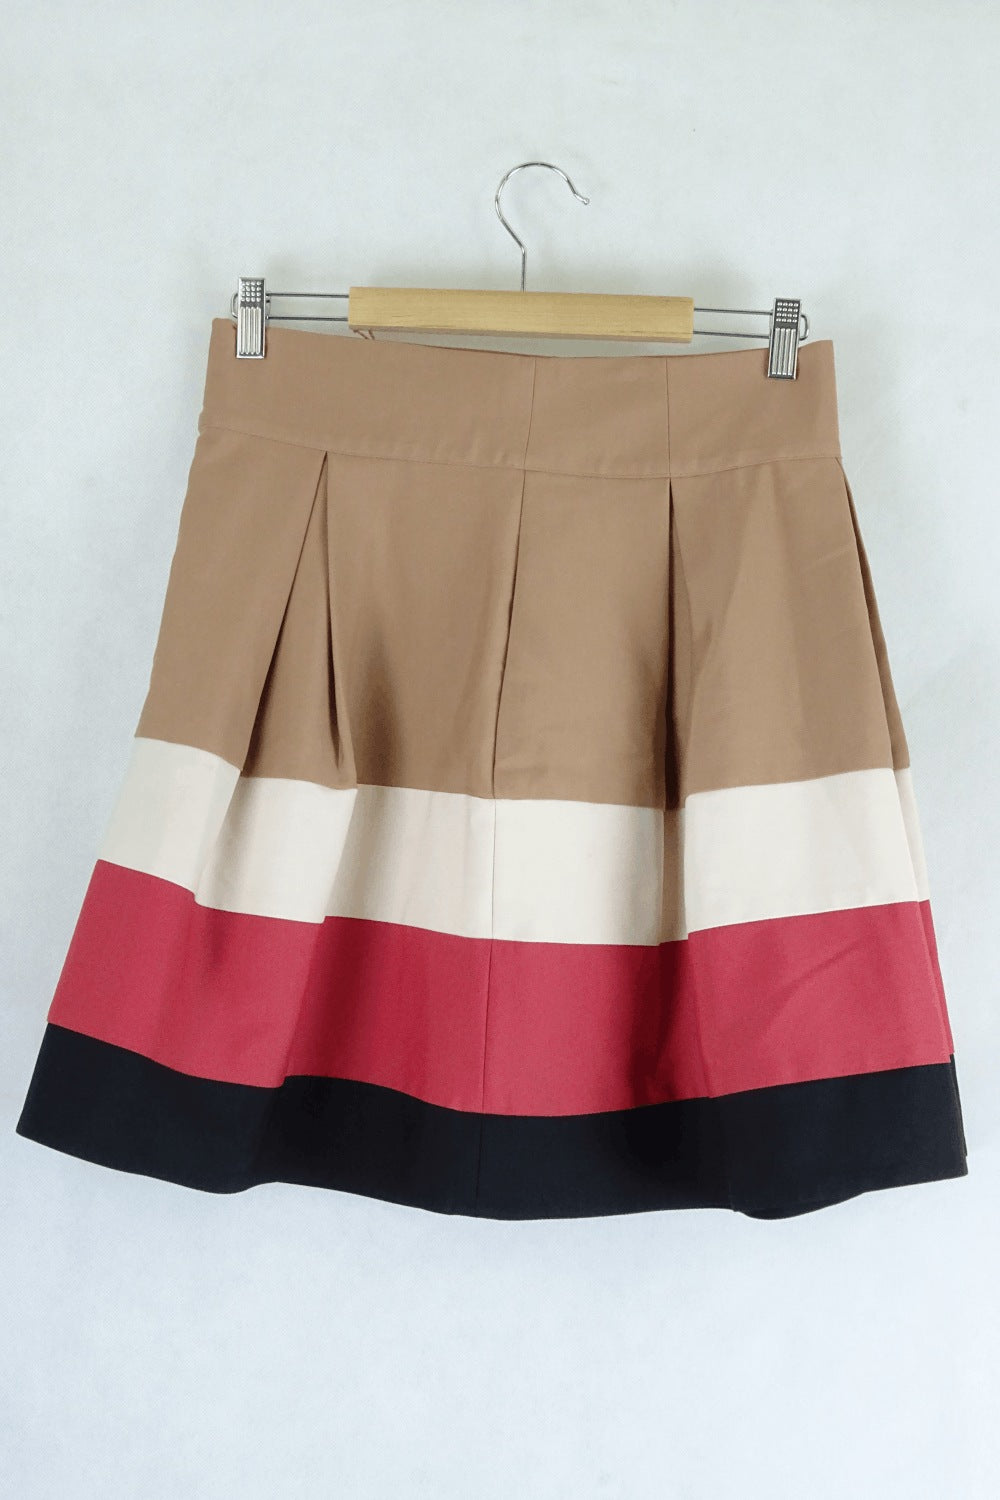 Zara Basics Brown Striped Skirt M